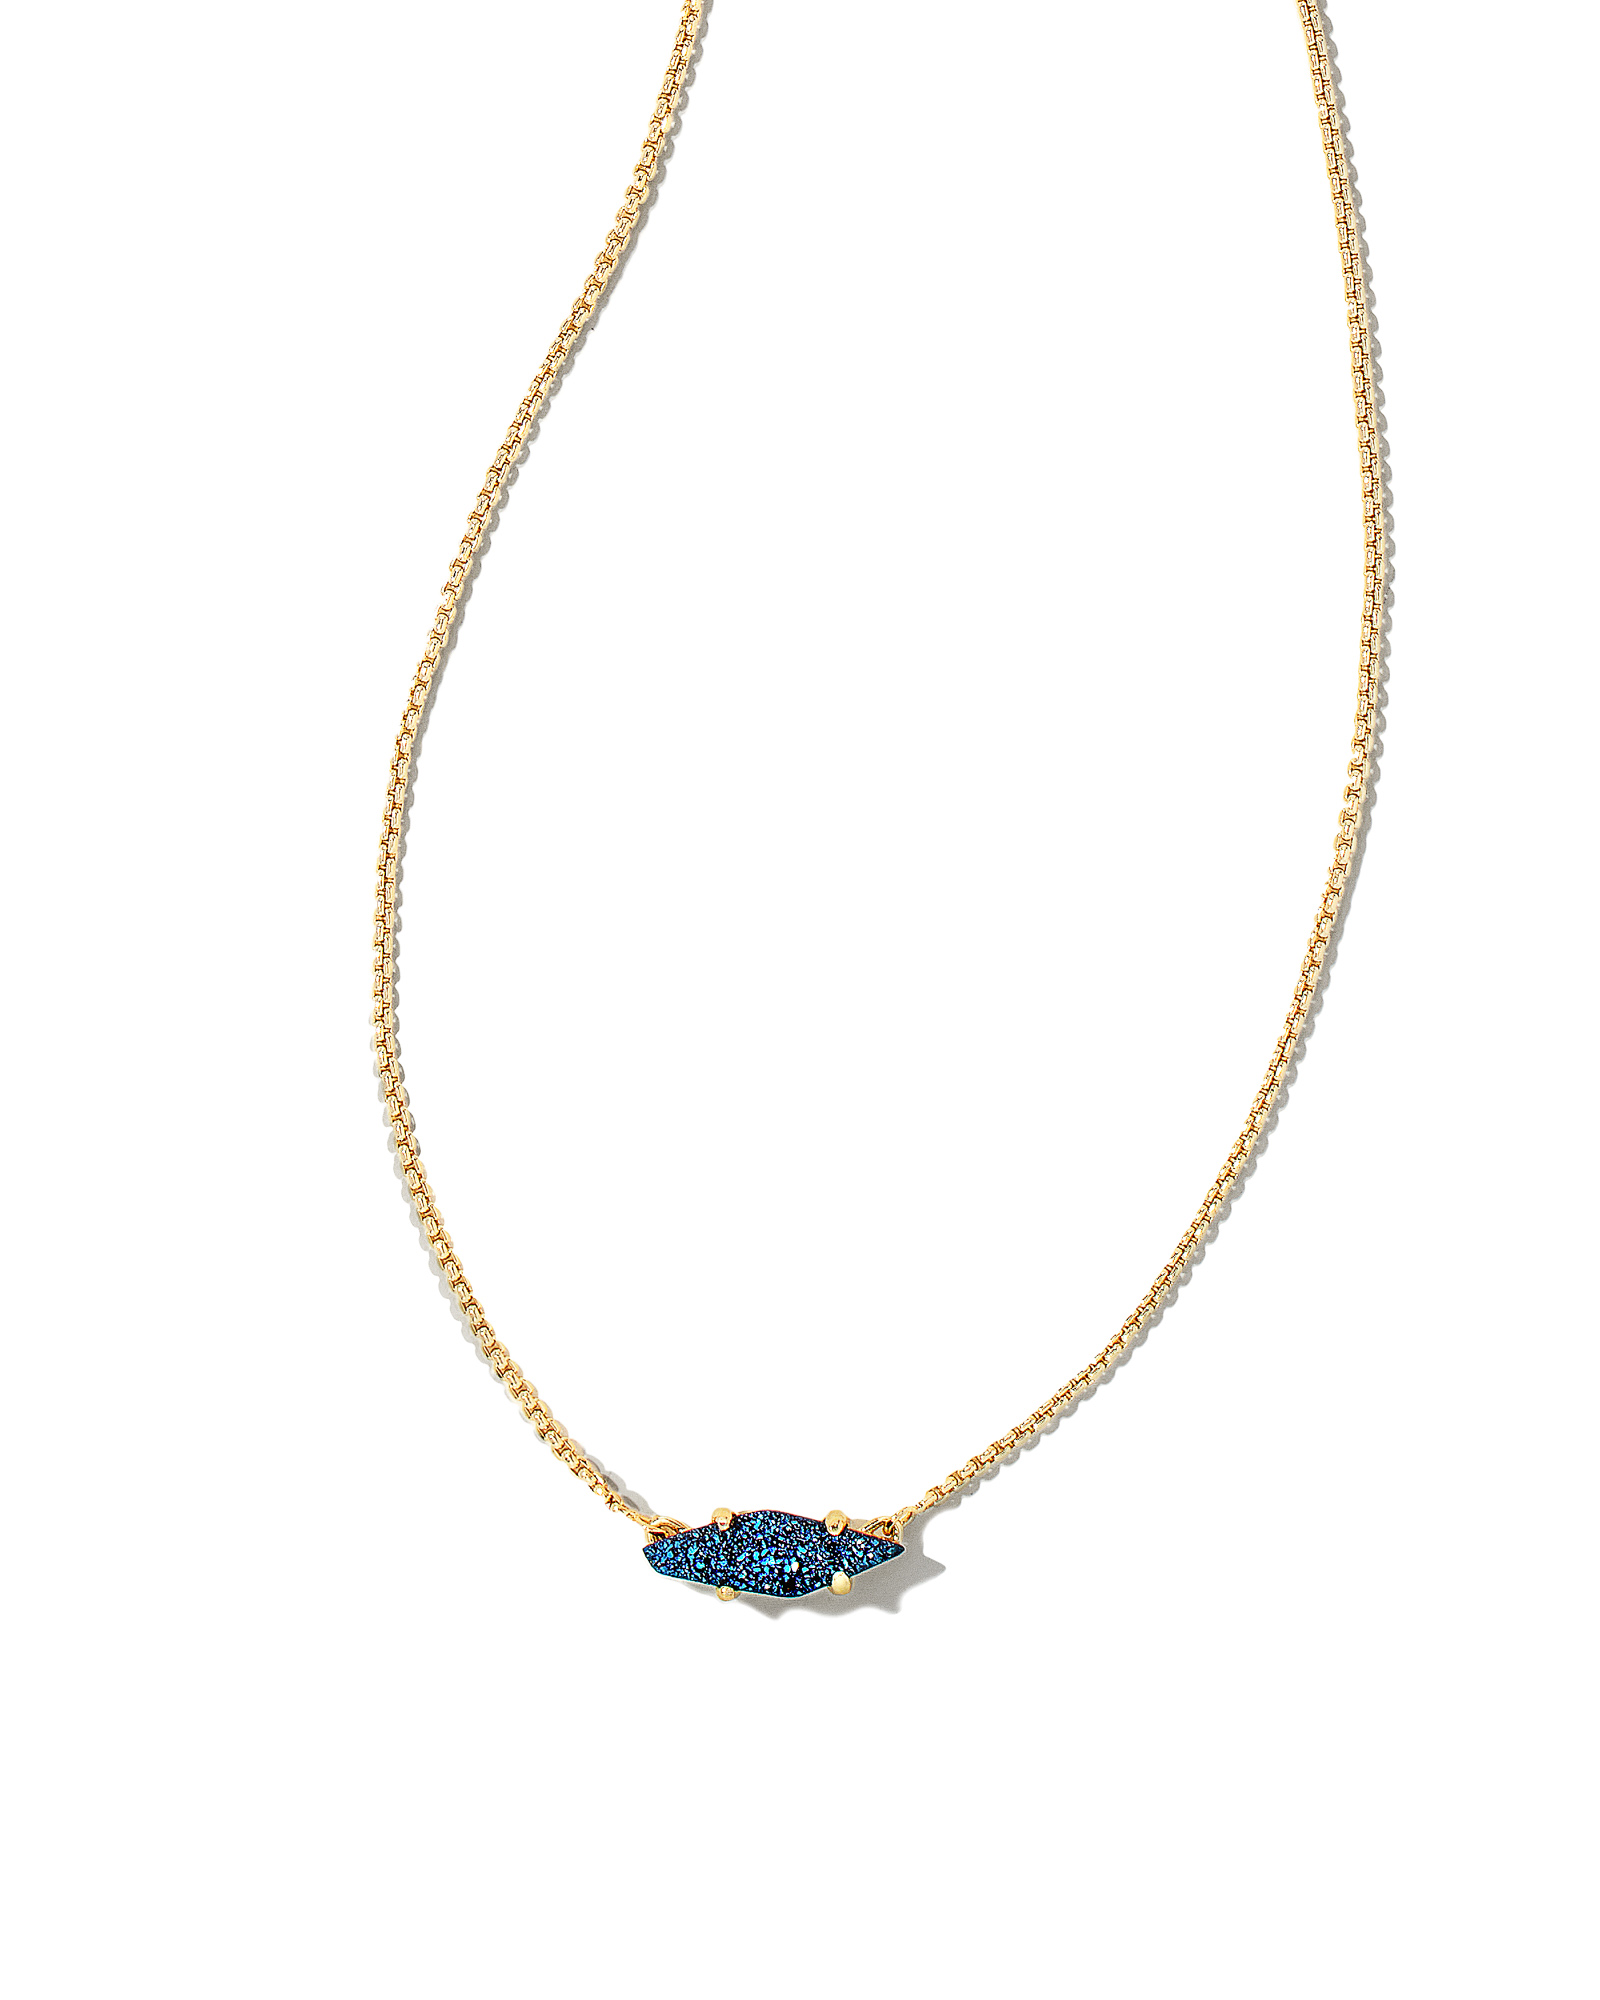 Bridgete Gold Pendant Necklace in Blue Drusy | Kendra Scott